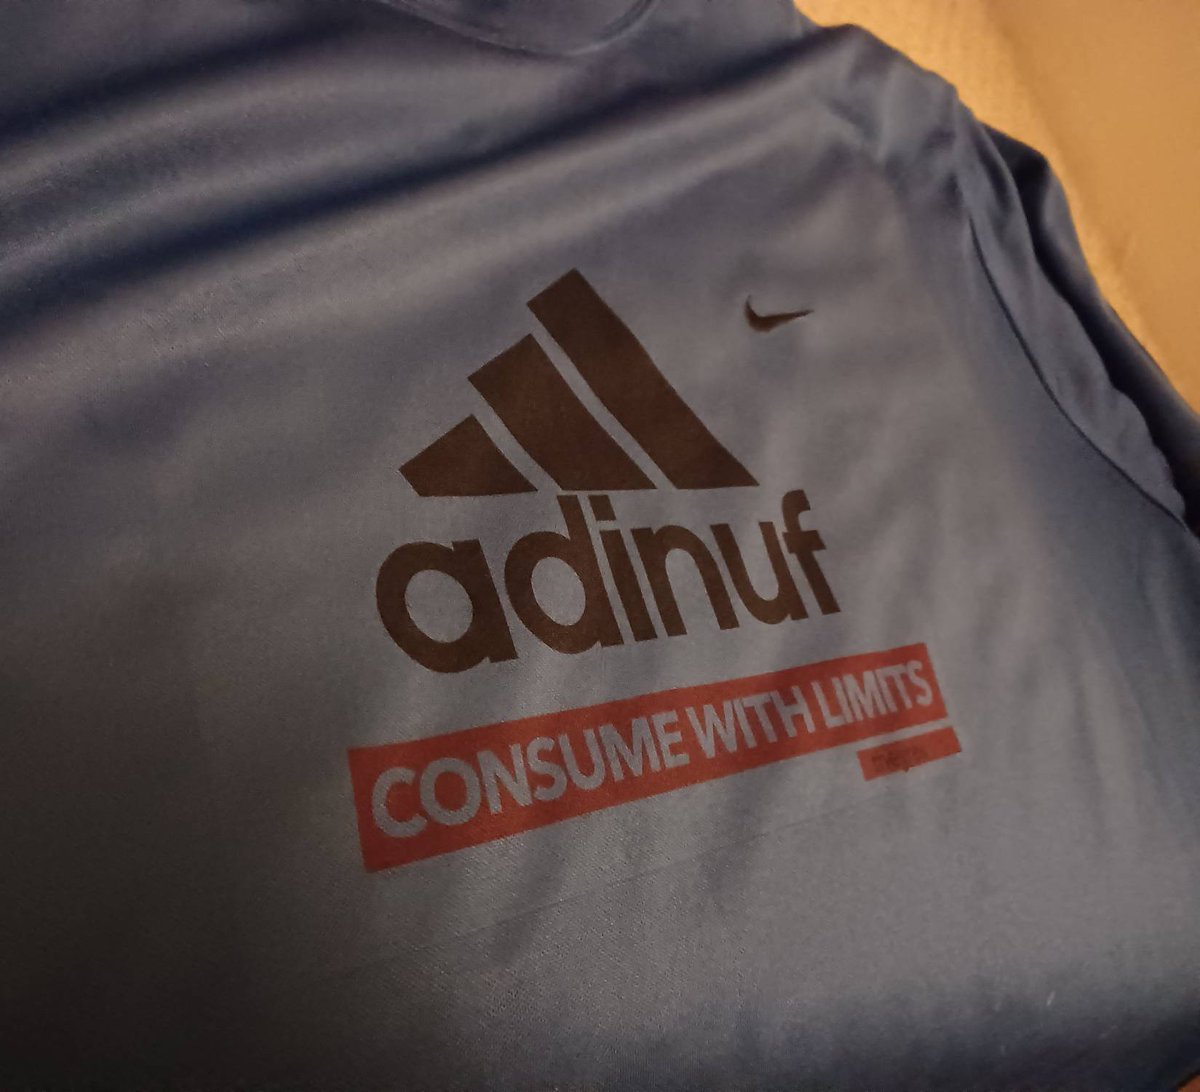 Love my new upcycled 'adinuf' shirt from Dan & Charlotte at Re-Run #ukrunchat #sustainability